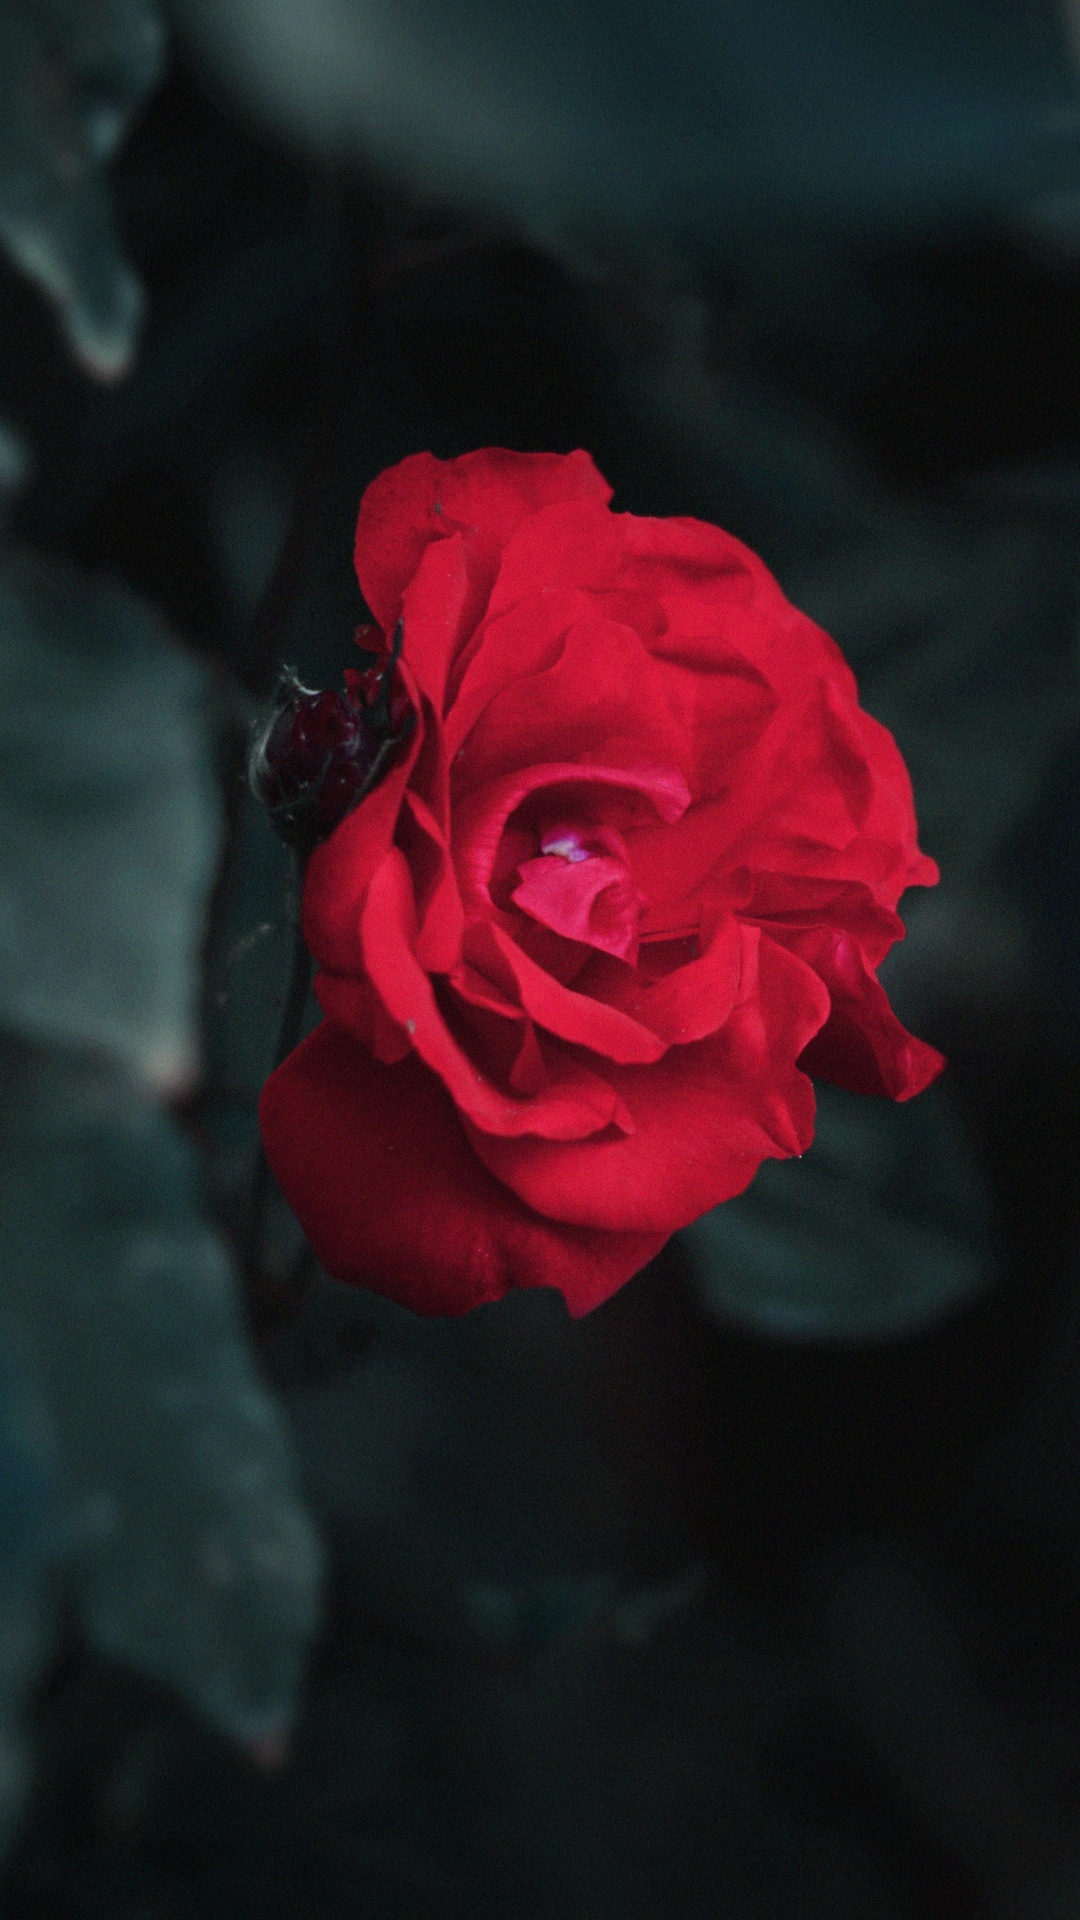 Rose Rouge en Photographie Rapprochée. Wallpaper in 1080x1920 Resolution